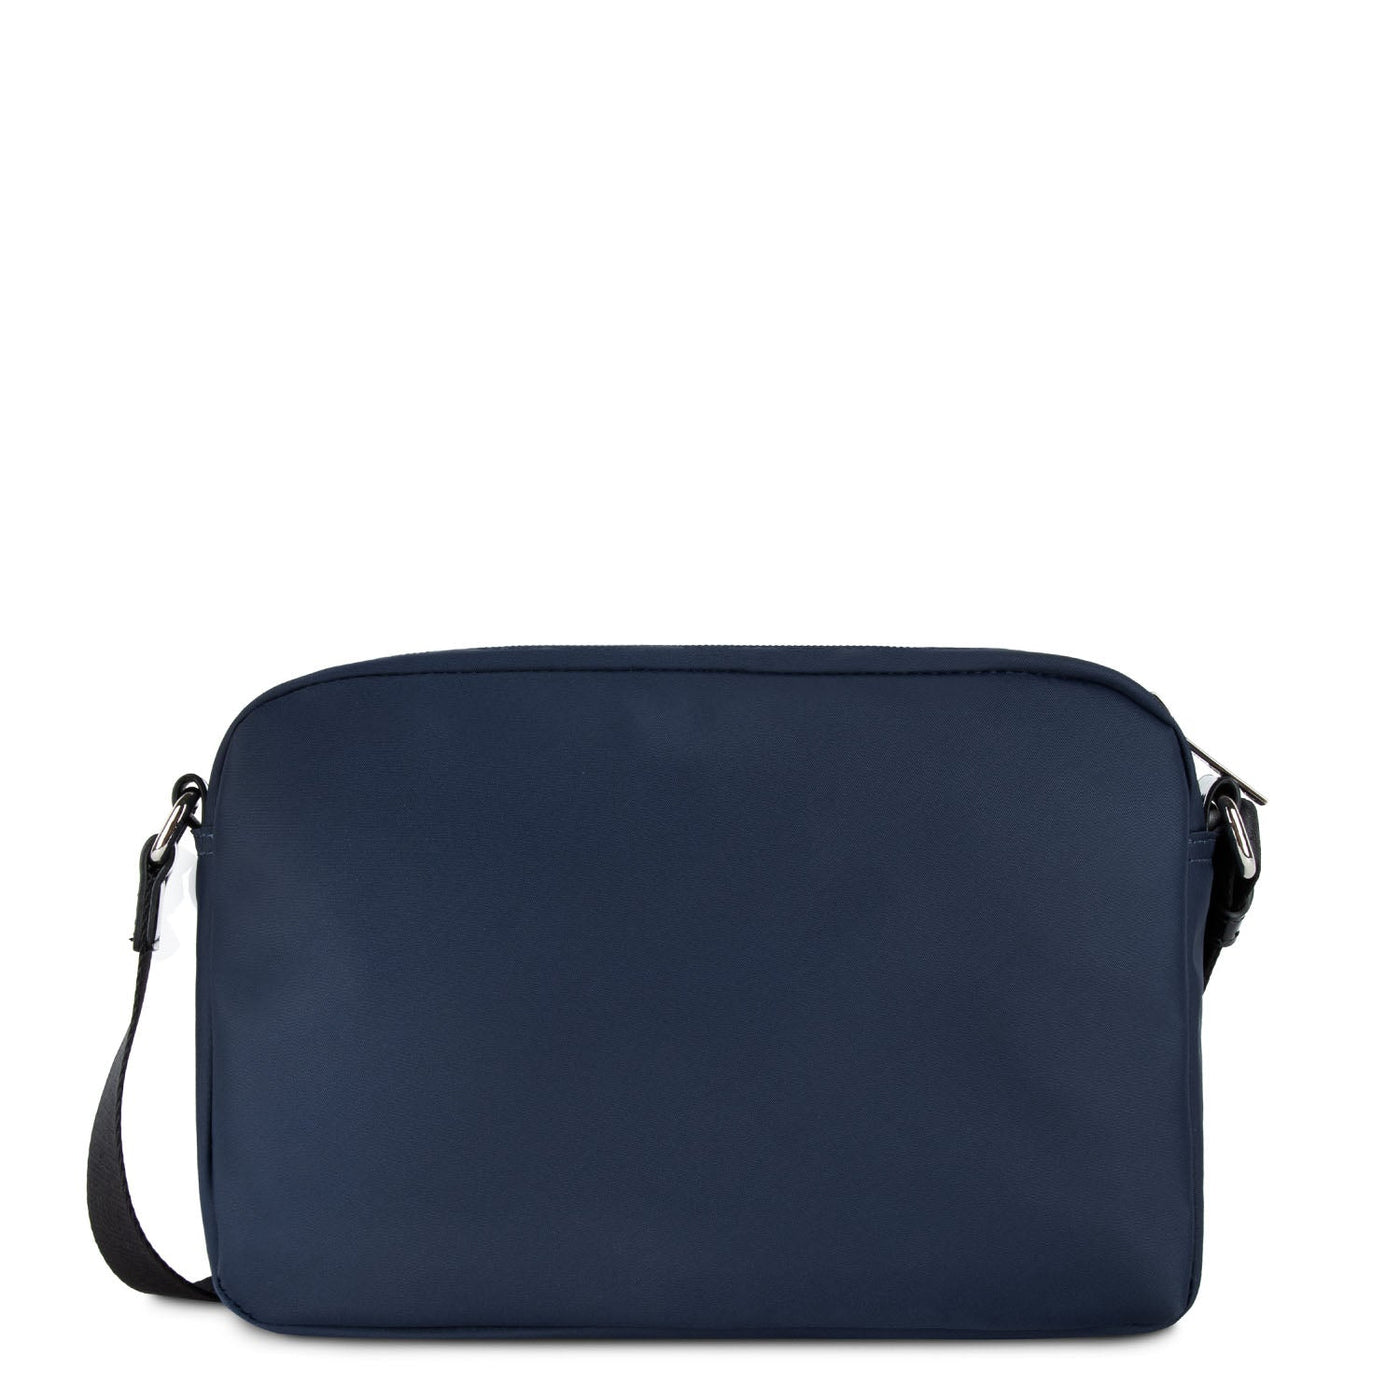 crossbody bag - basic verni #couleur_bleu-fonc